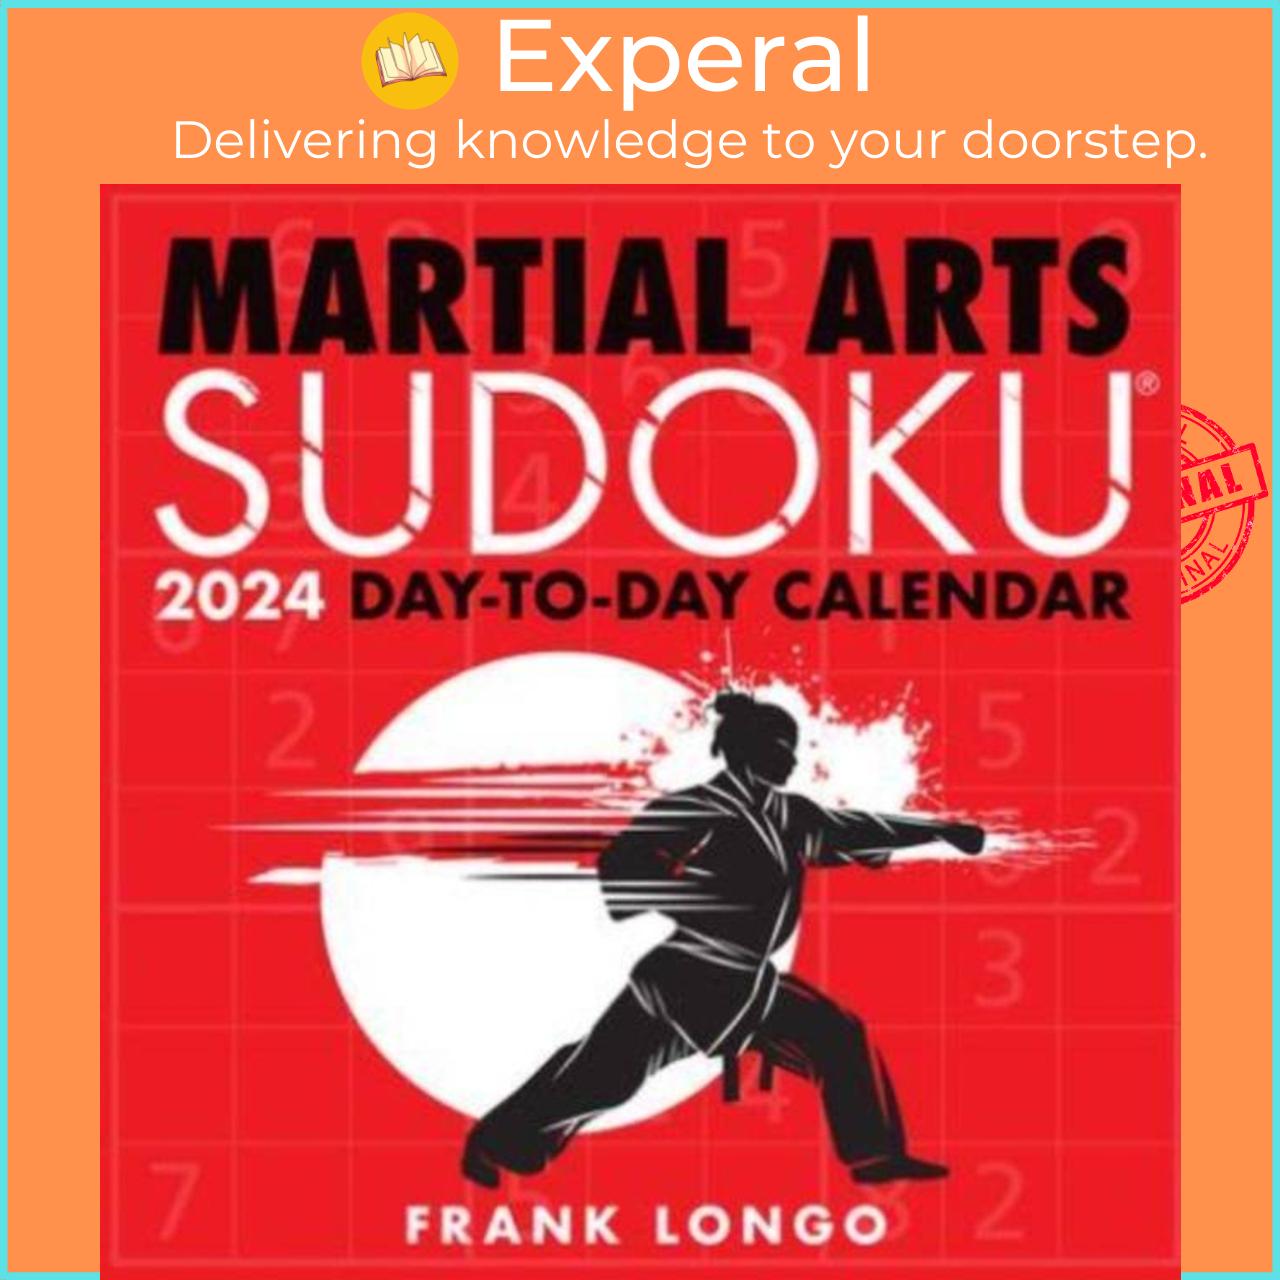 Sách - Martial Arts Sudoku (R) 2024 Day-to-Day Calendar by Frank Longo (UK edition, paperback)